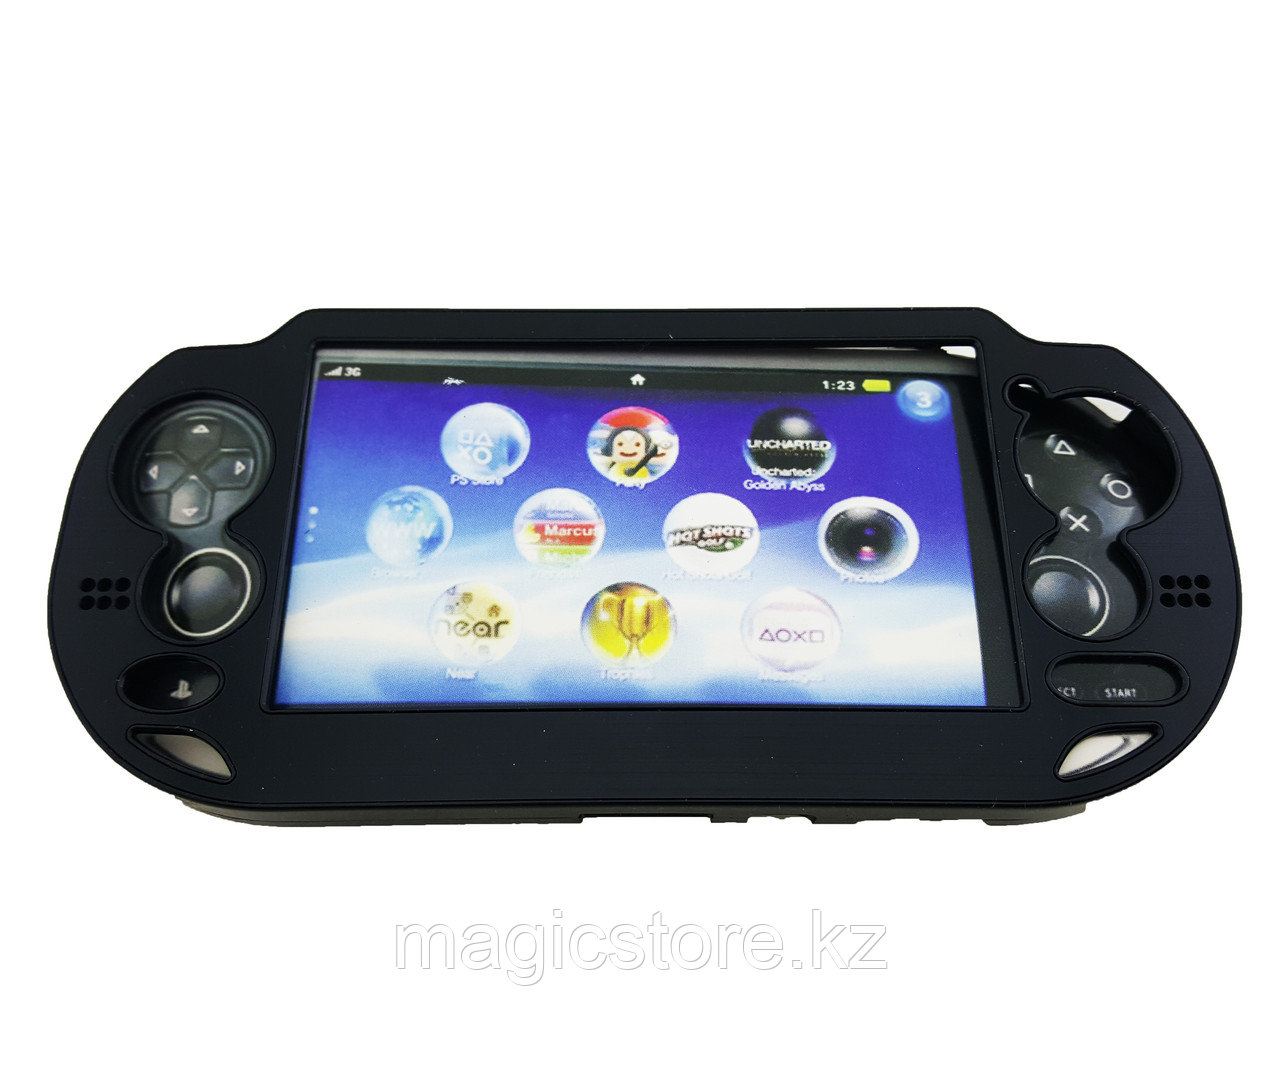 Чехол защитный алюм-металл Sony PS Vita Different Material Case Protective Case, черный